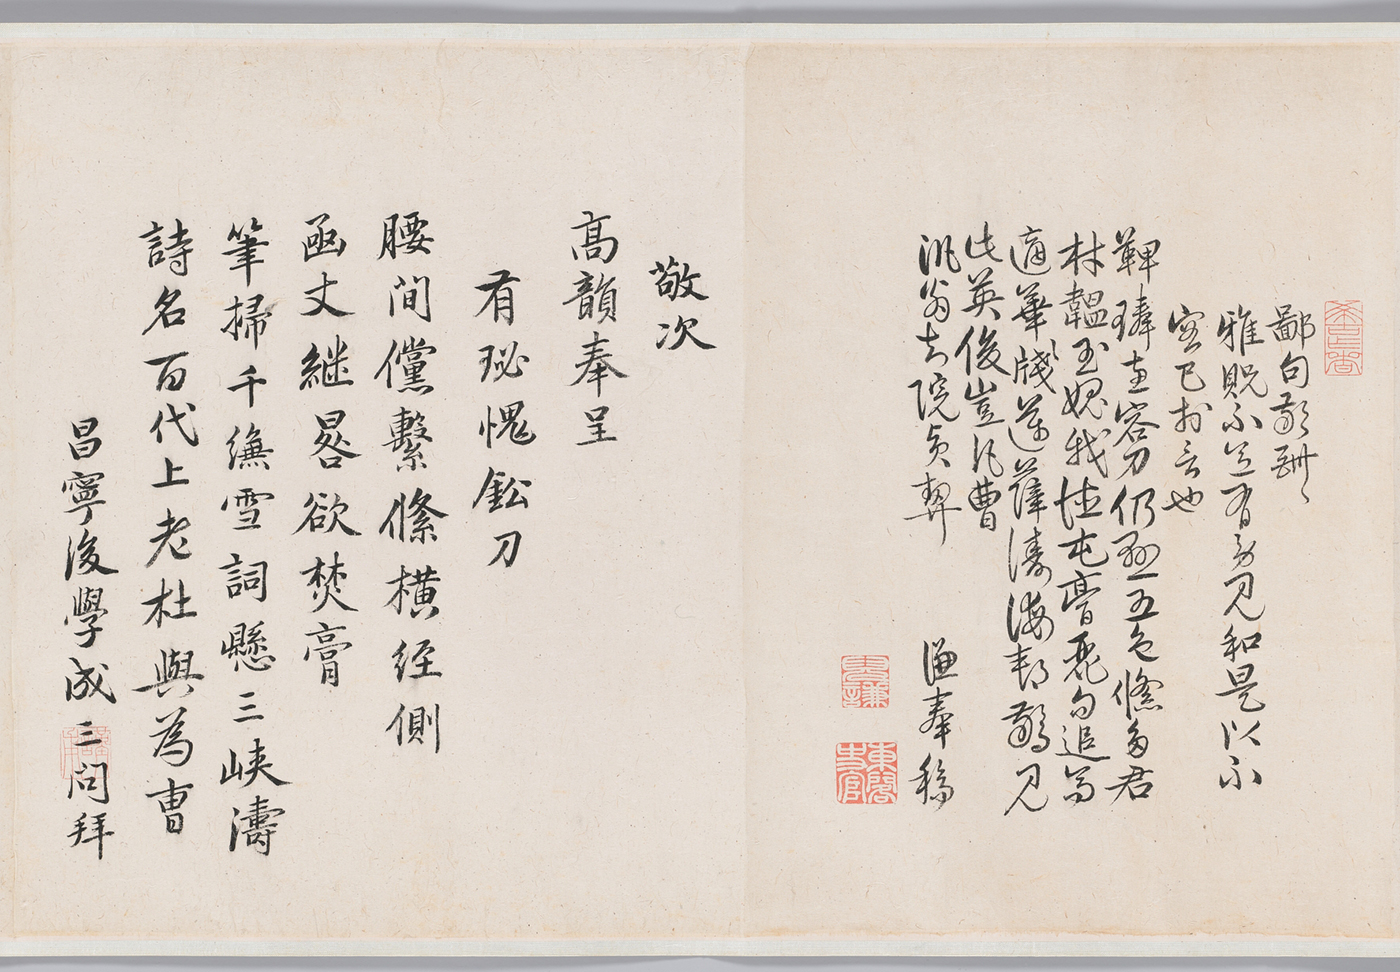 Poems by Ni Qian and Seong Sammun, Bongsa Joseon Changhwa Sigwon (Poetry Book Between Ming Envoys and Joseon Literati) (detail), 1450, Joseon Dynasty, Korea, ink on paper, 33 x 1600 cm (The National Museum of Korea, Treasure 1404)